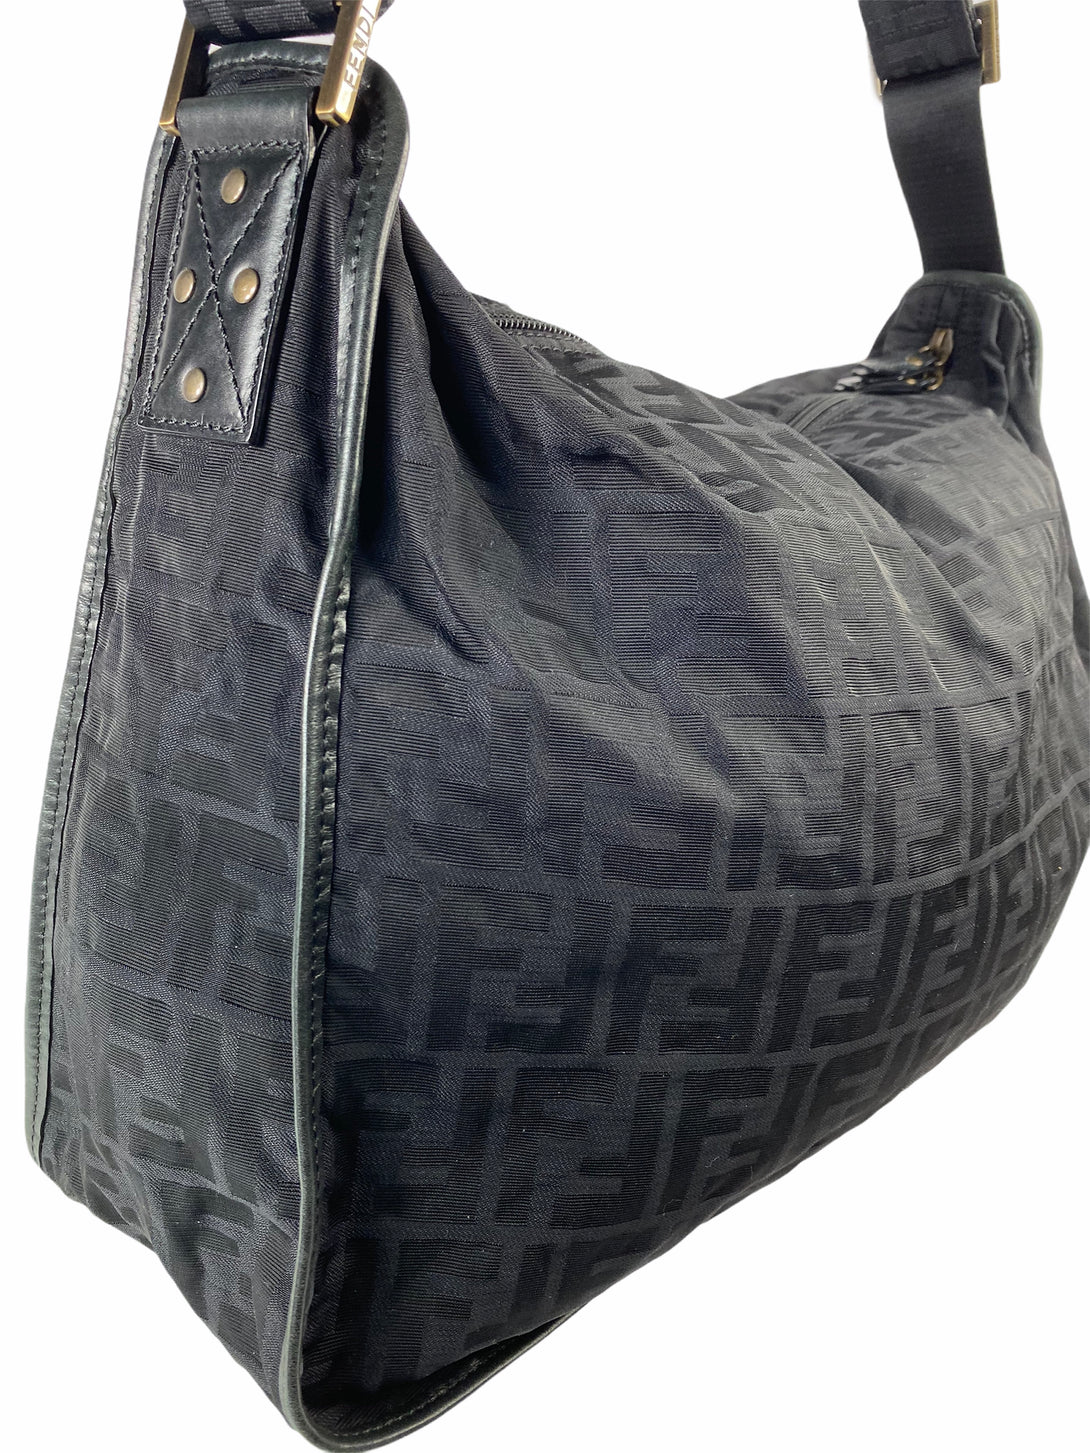 Fendi Black Monogram Canvas Messenger Bag - As Seen On Instagram 06/09/2020 - Siopaella Designer Exchange